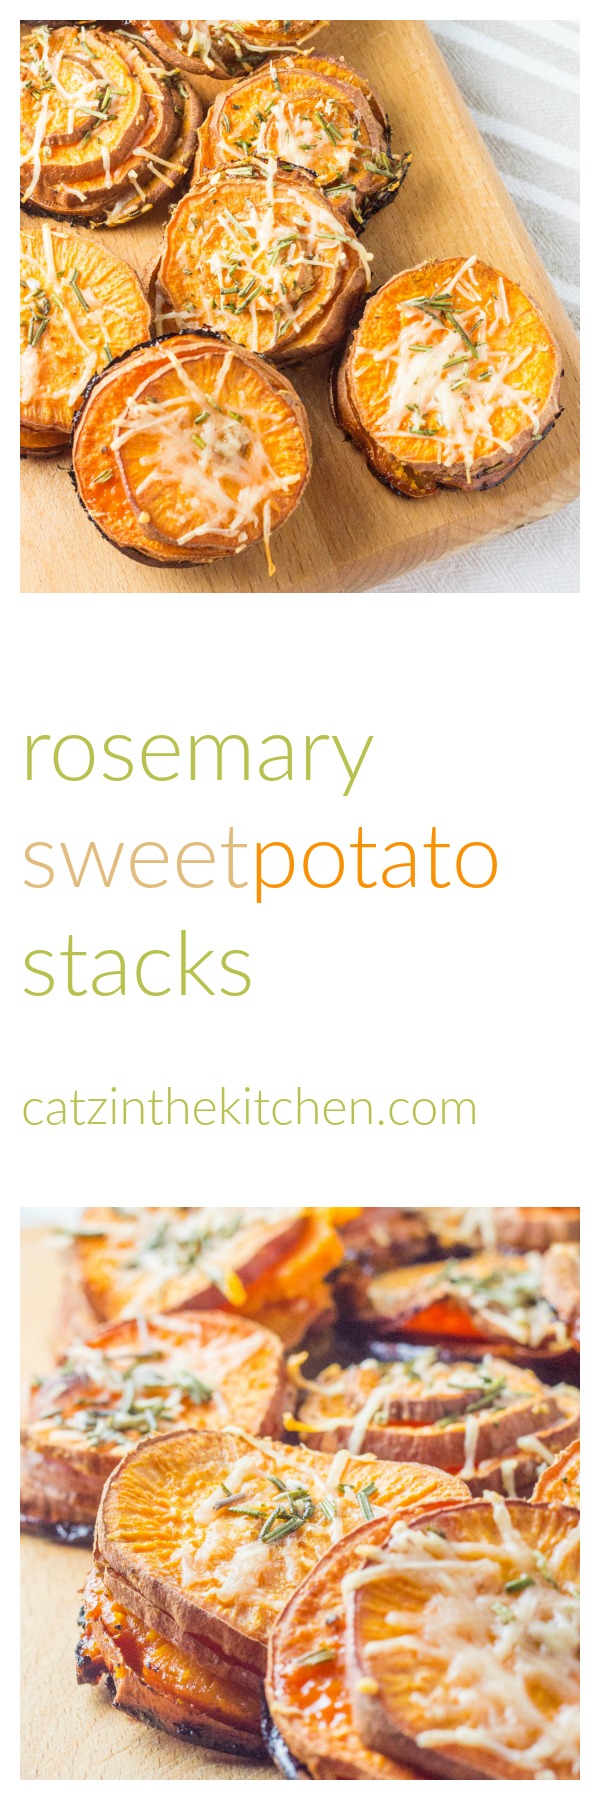 Rosemary Sweet Potato Stacks | Catz in the Kitchen | catzinthekitchen.com | #sweetpotatoes #rosemary #recipe